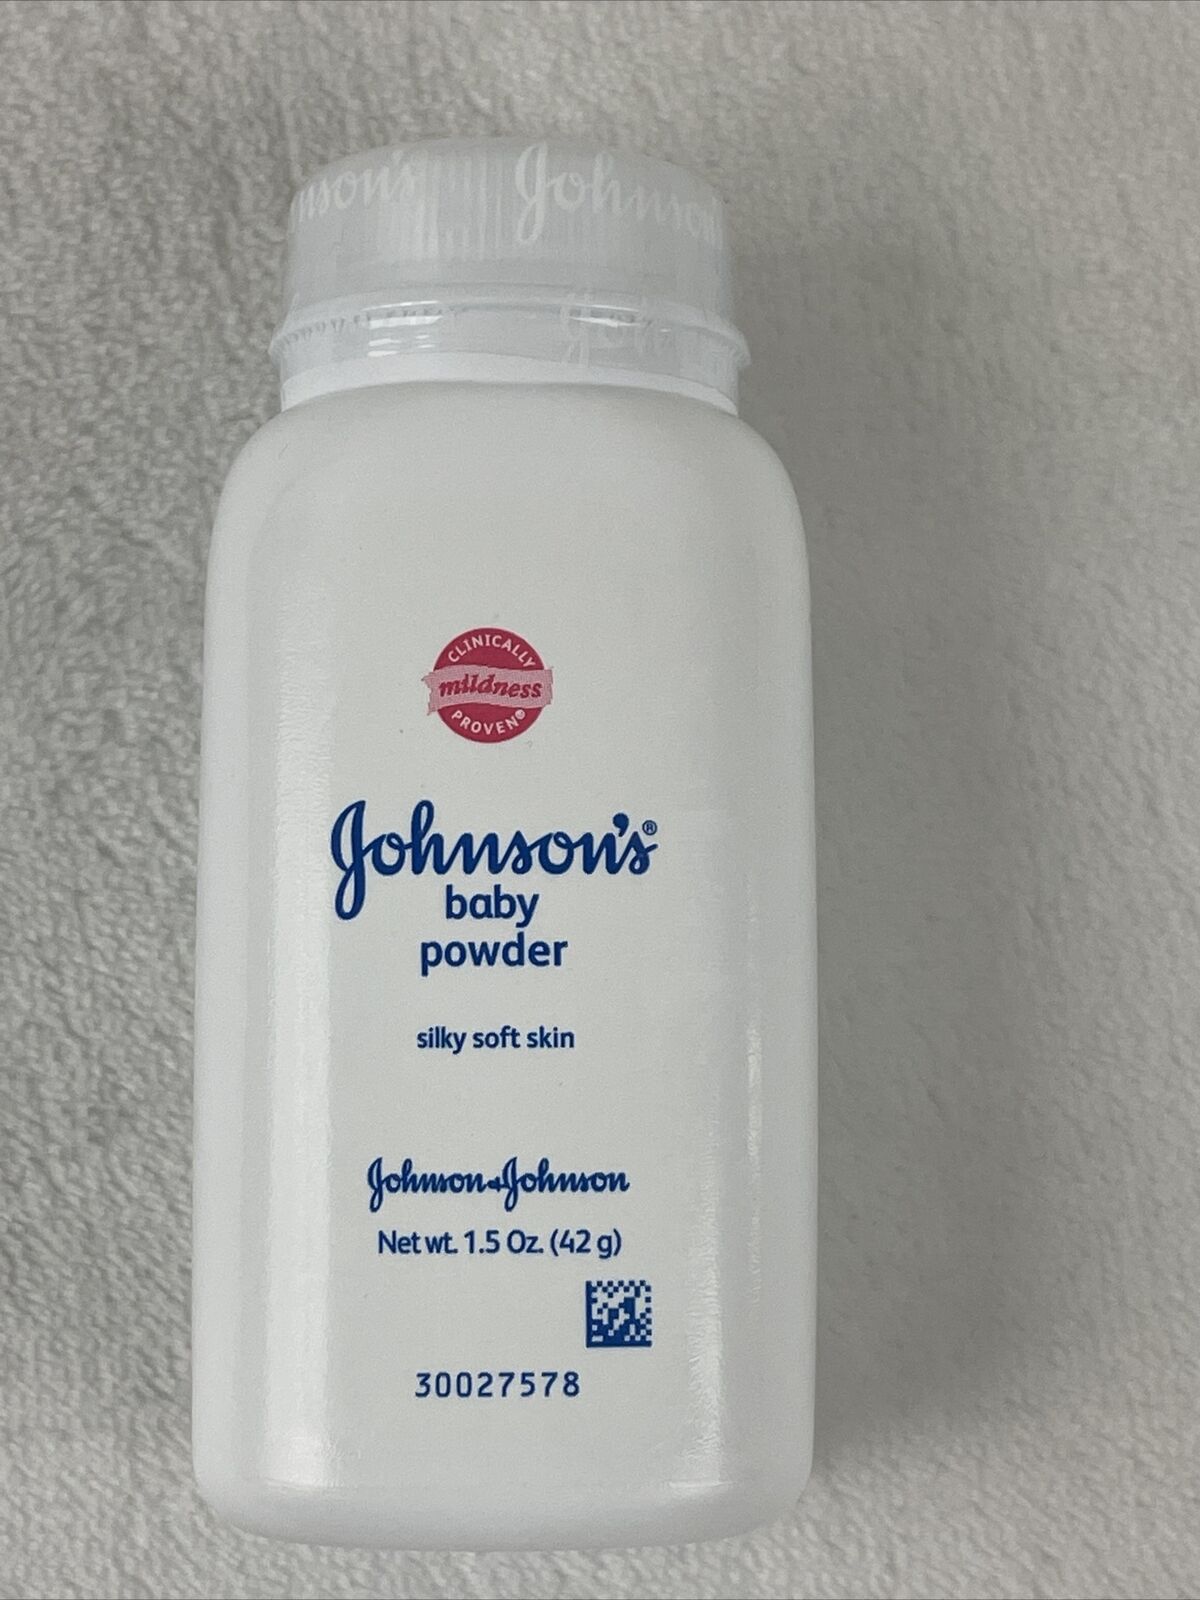 NEW Vintage Johnson\'s Baby Powder Bottle Johnson & Johnson 1.5 Oz Talc Mildness